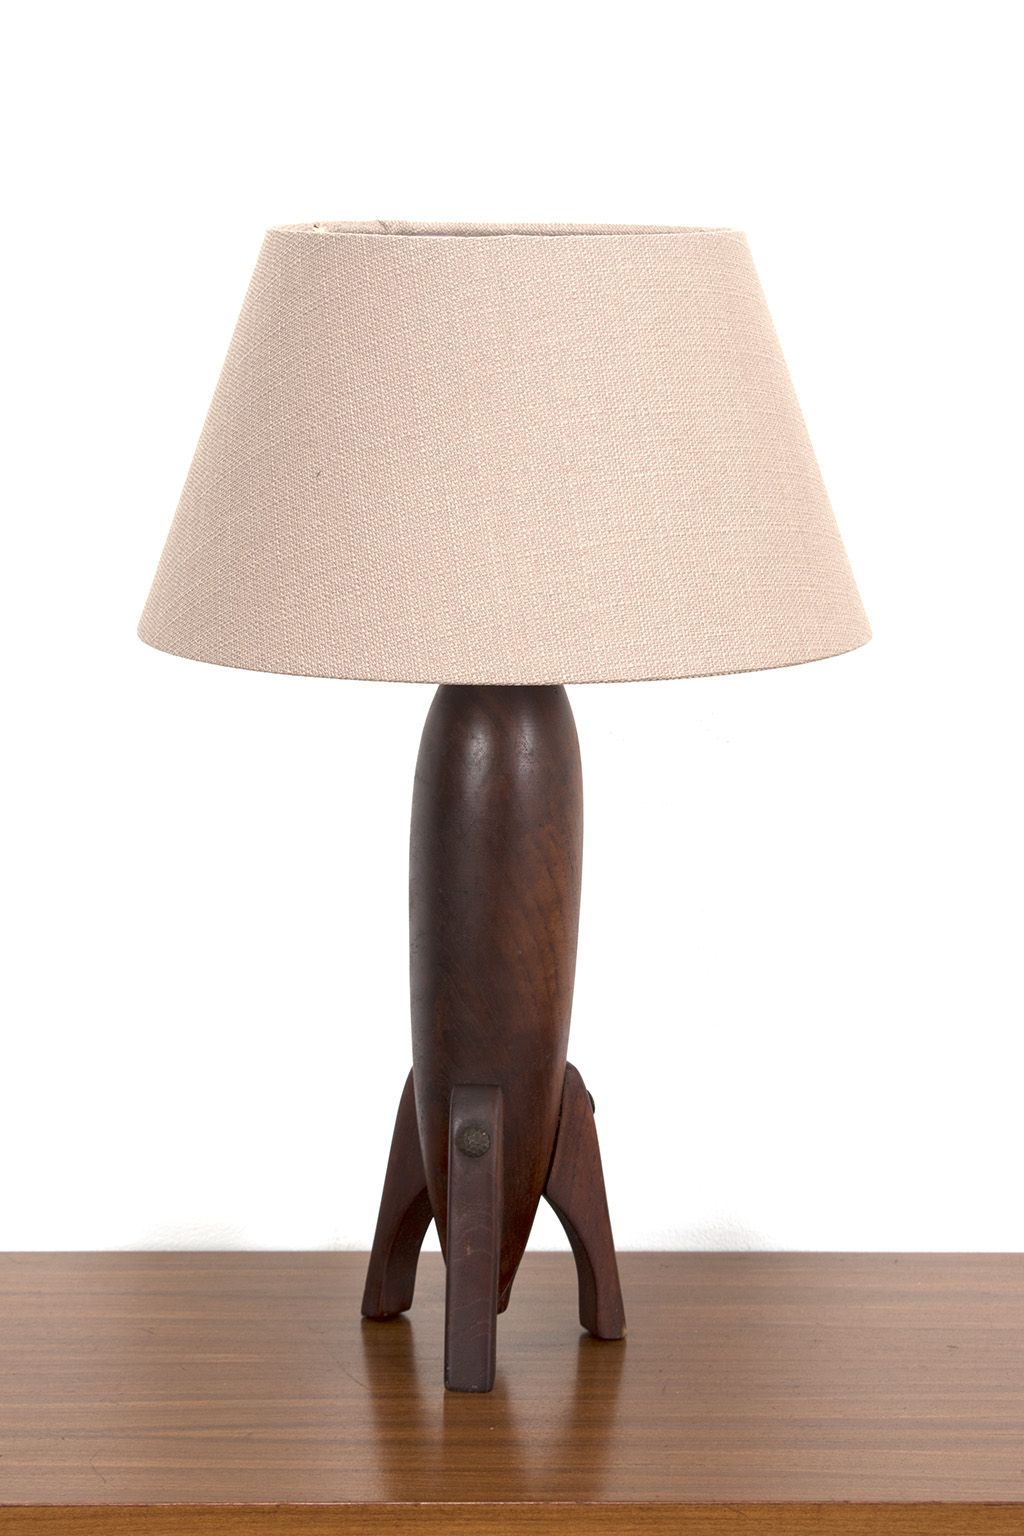 Rocket-shaped table lamp